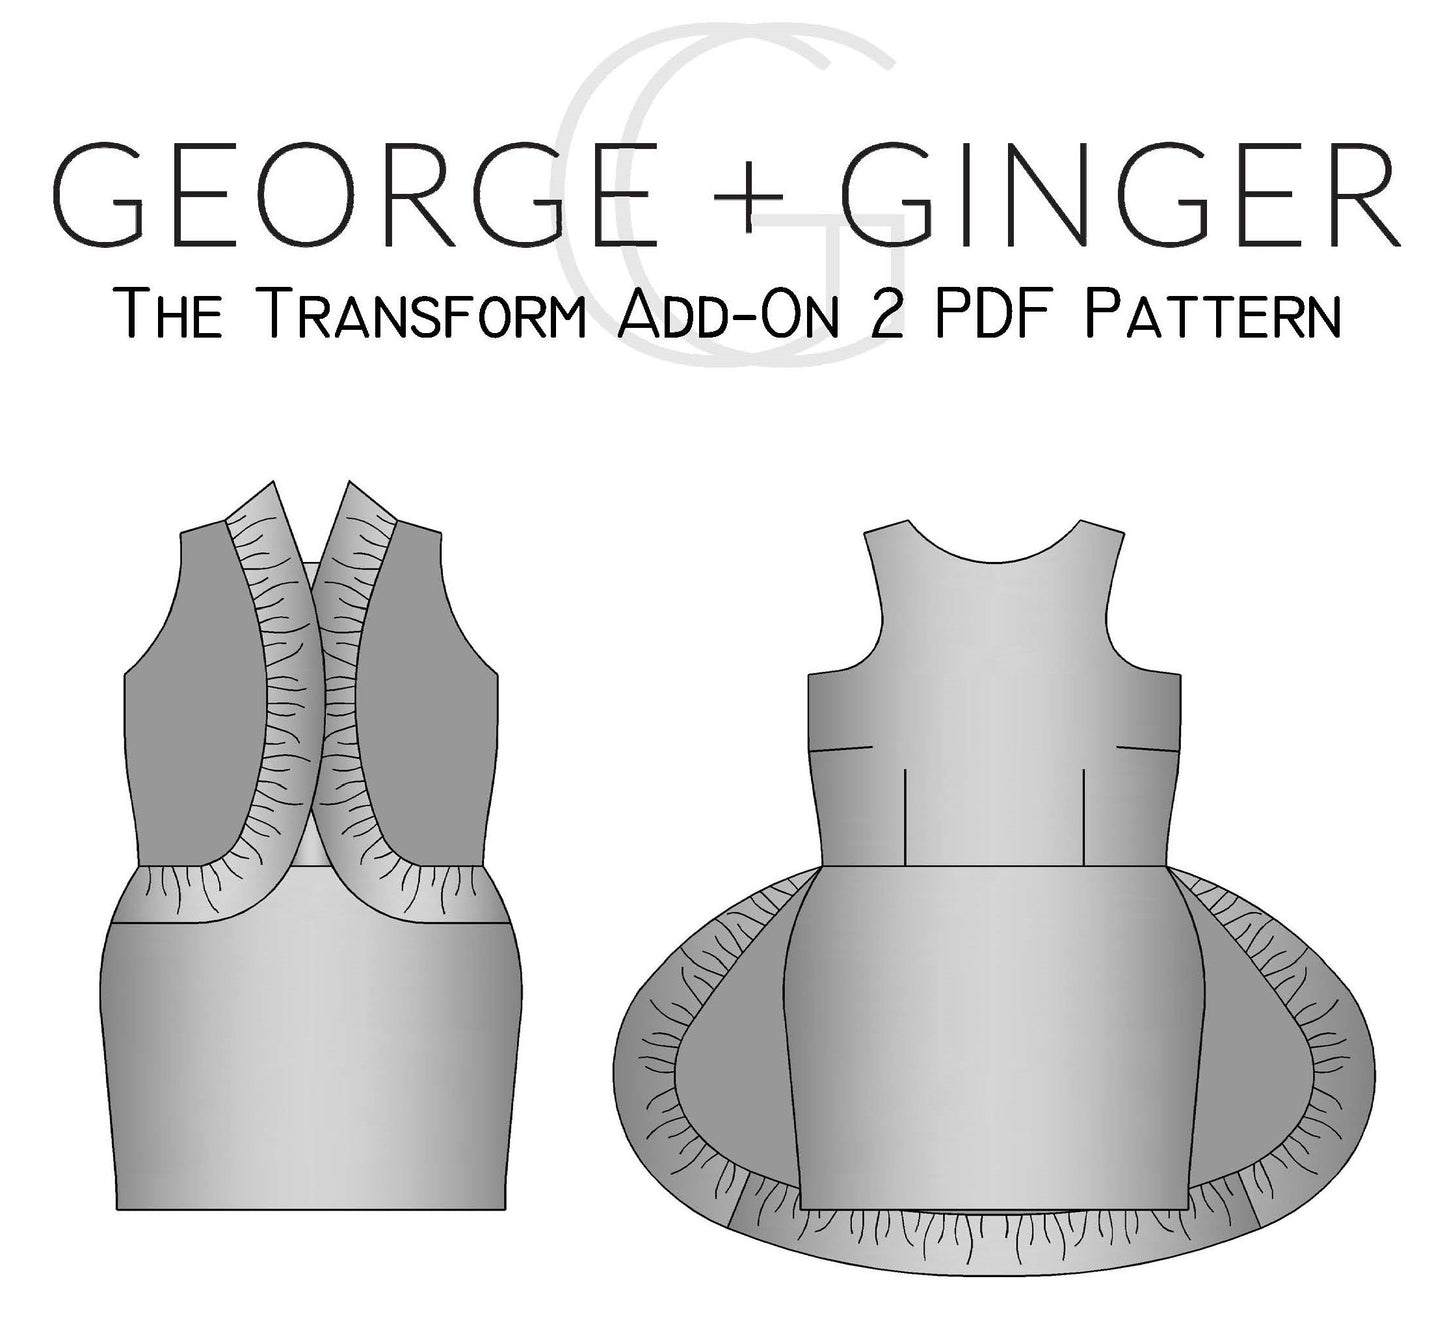 The Transform Add-On 2 PDF Sewing Pattern